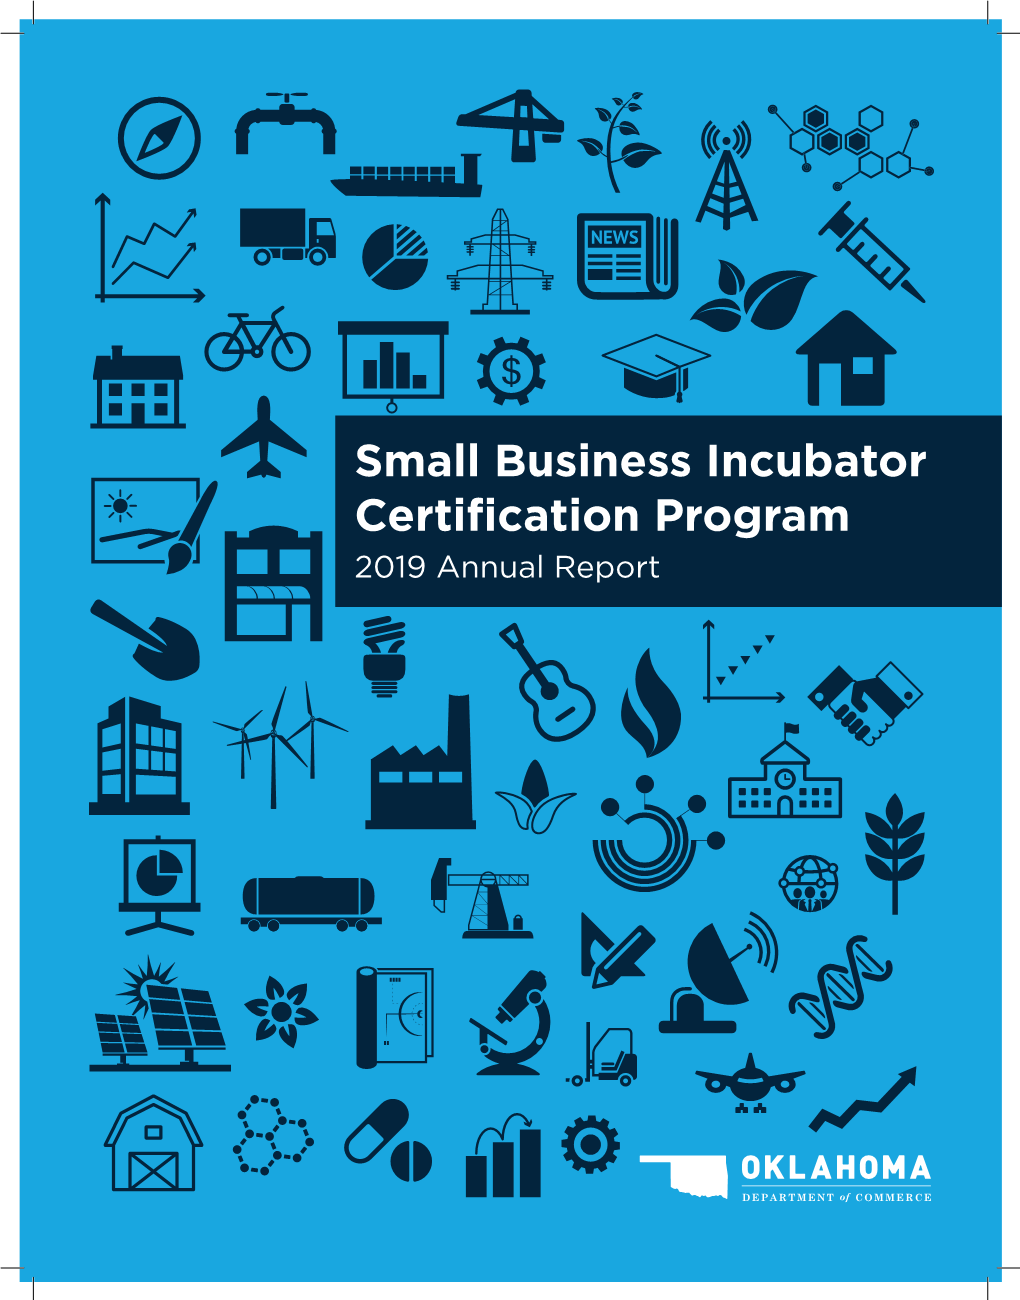 Small Business Incubator Certification Program 2019 Annual Report Incubator Certification Program Overview